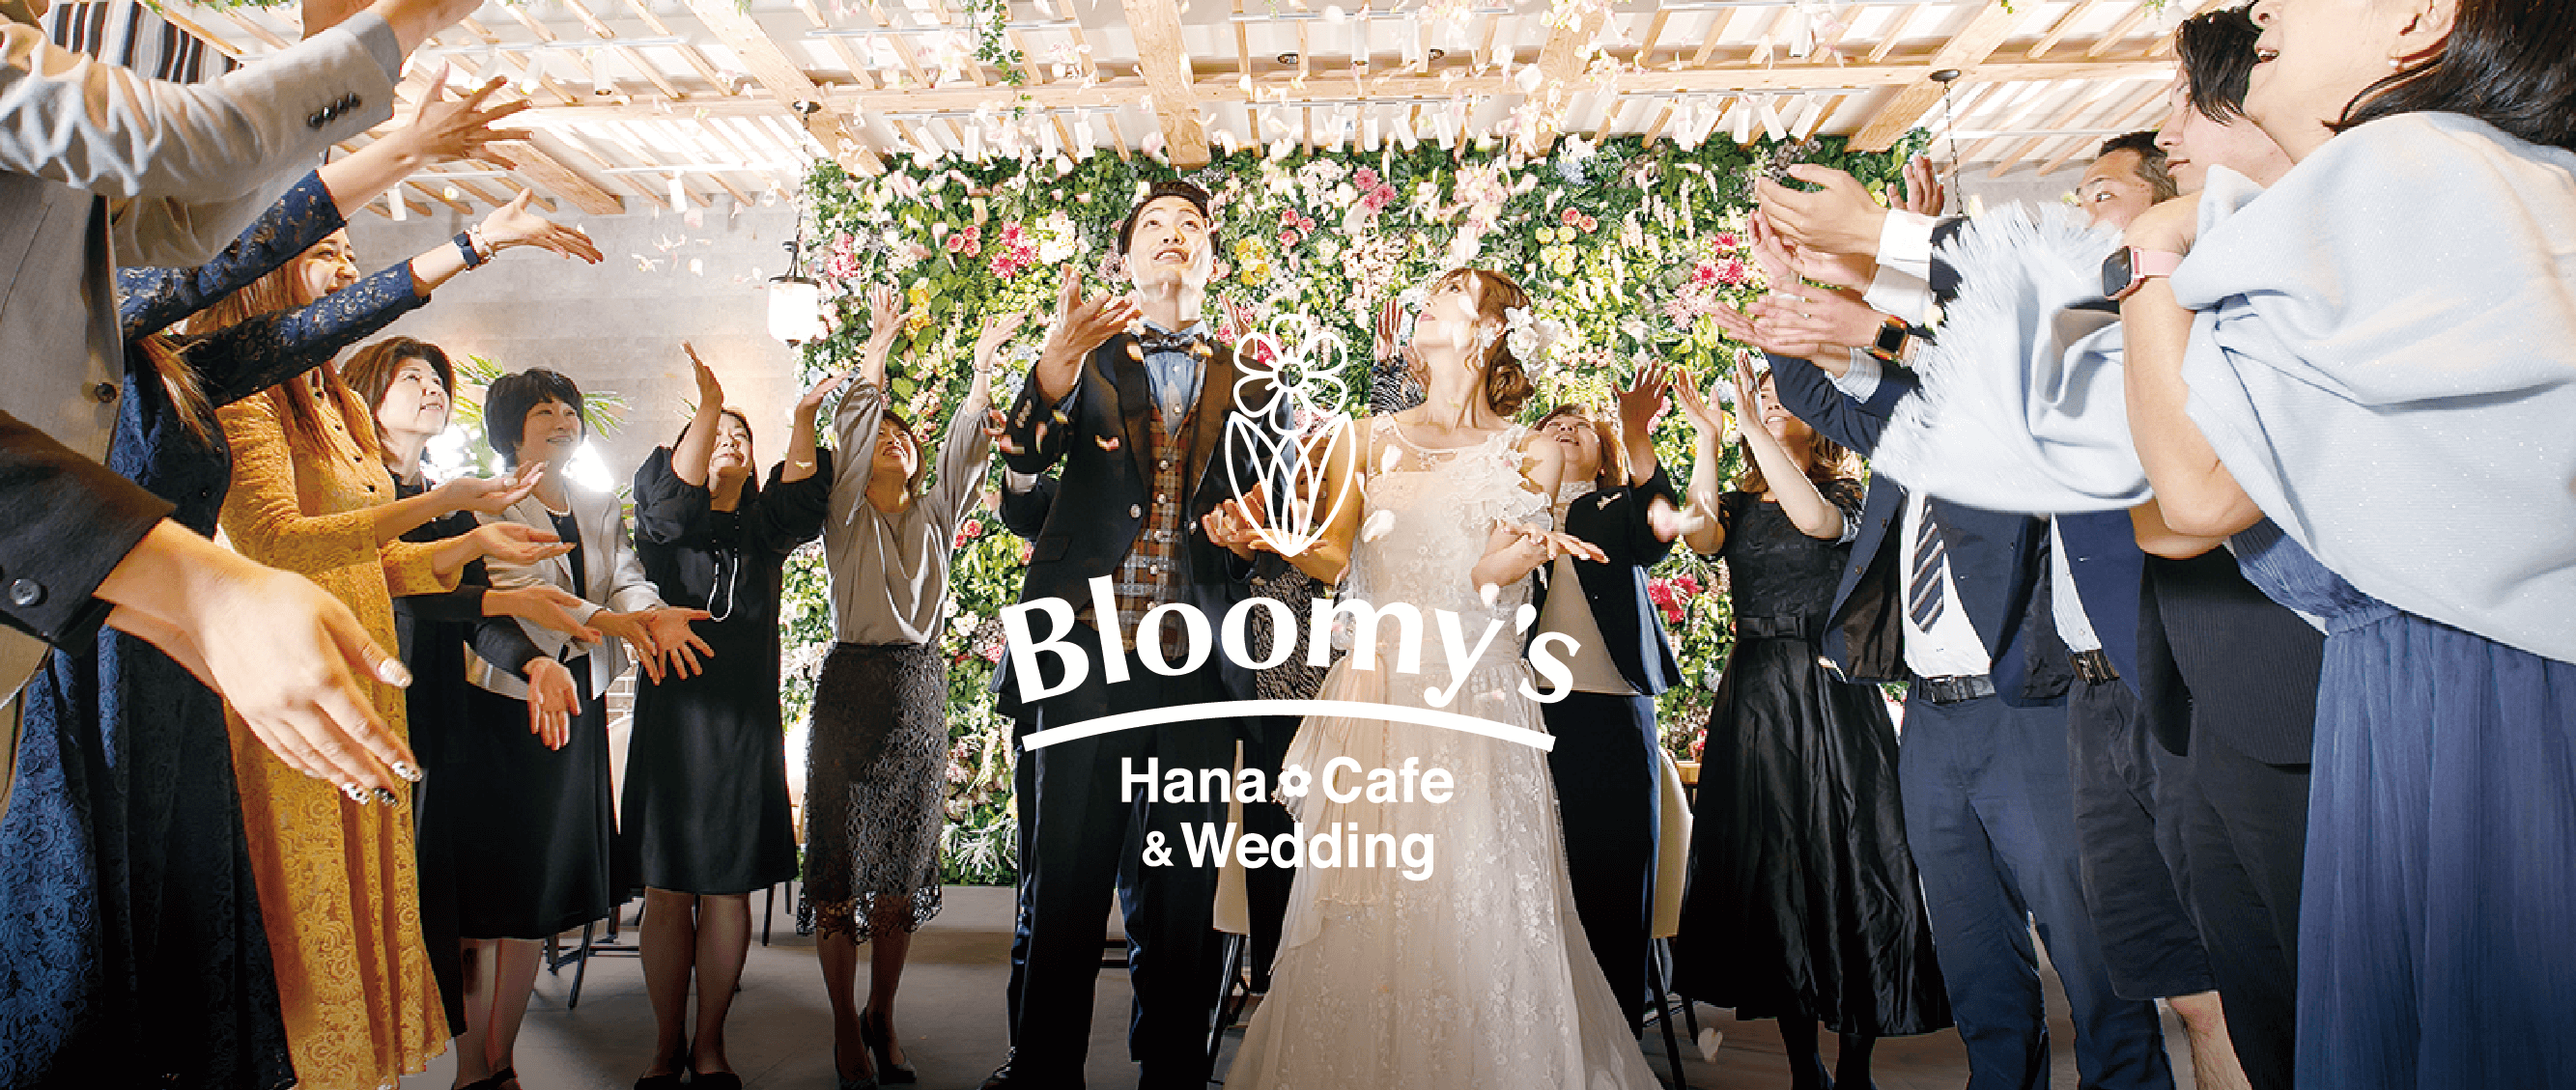 Bloomy's Hana/Cafe & Wedding